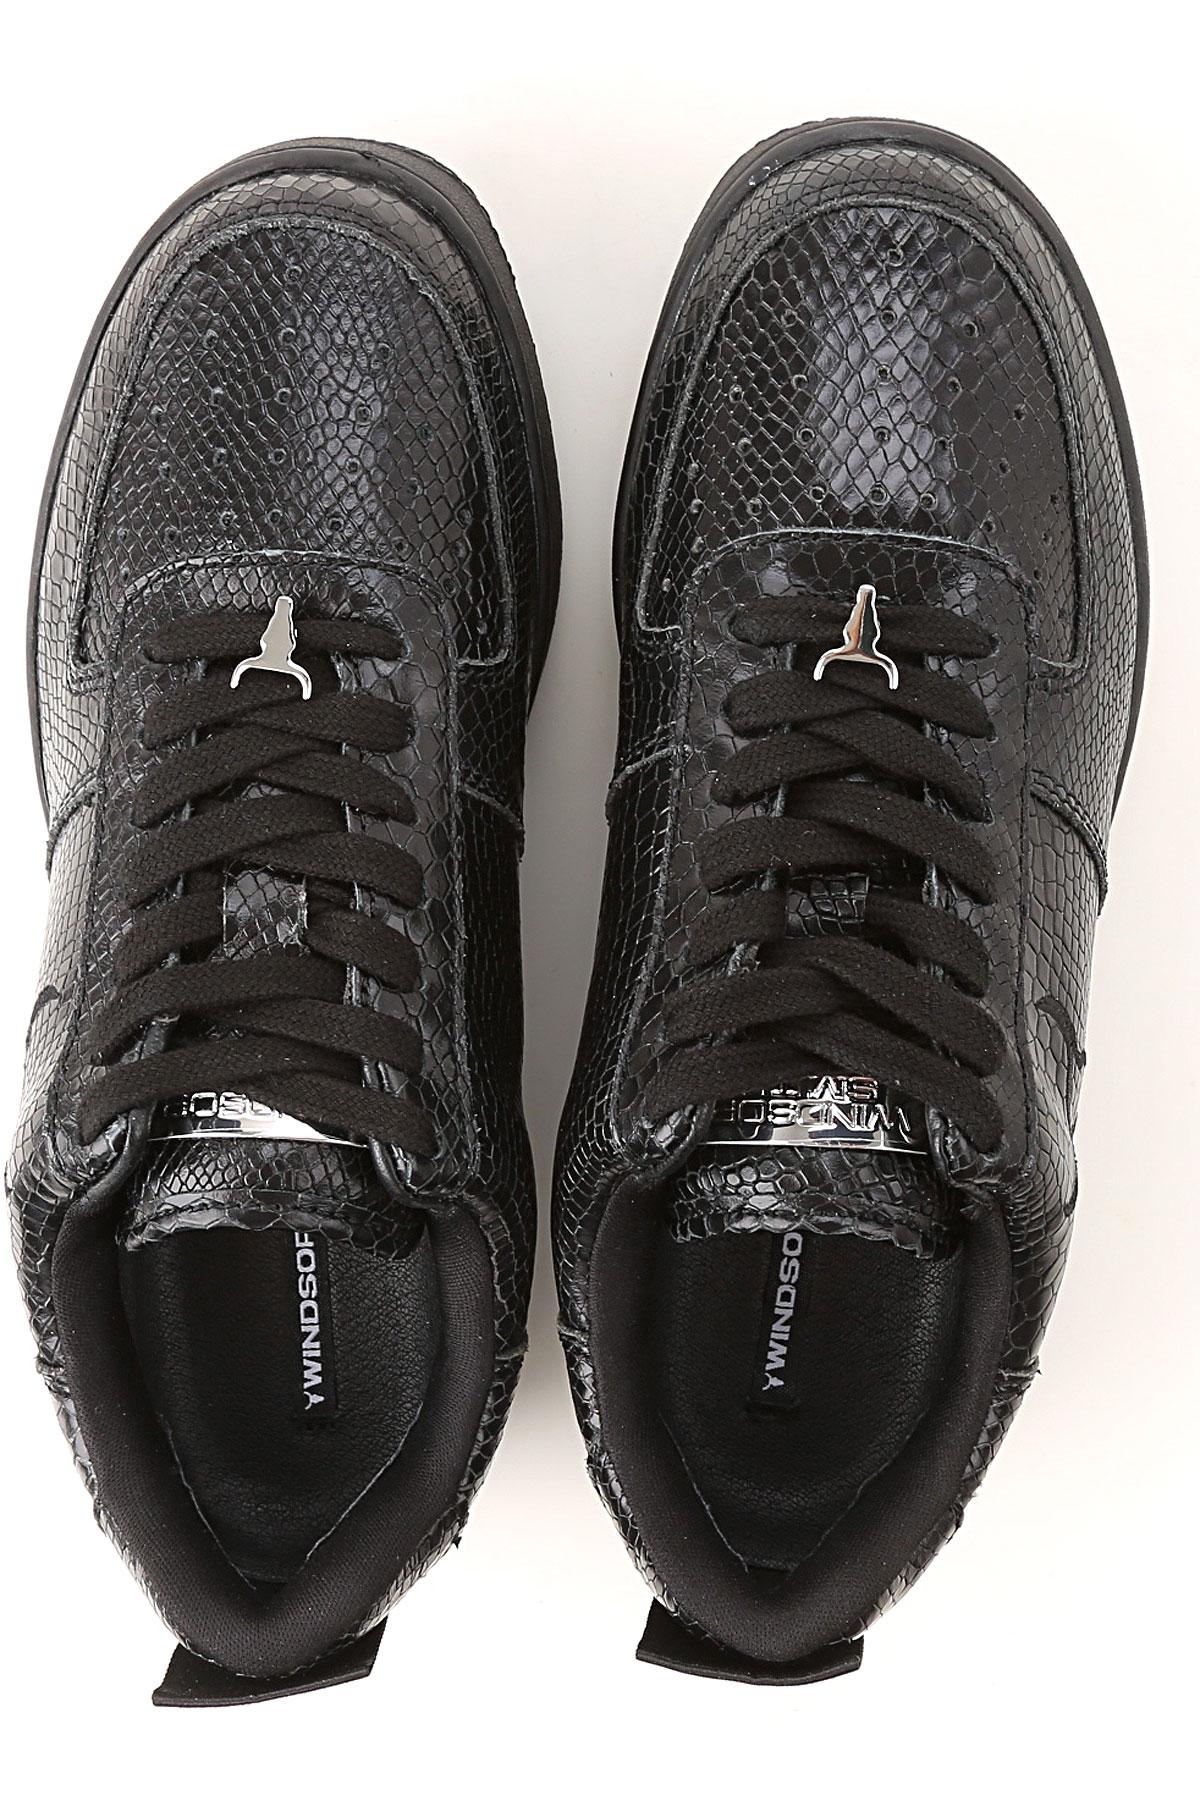 Windsor Smith Black Sneakers For Women 